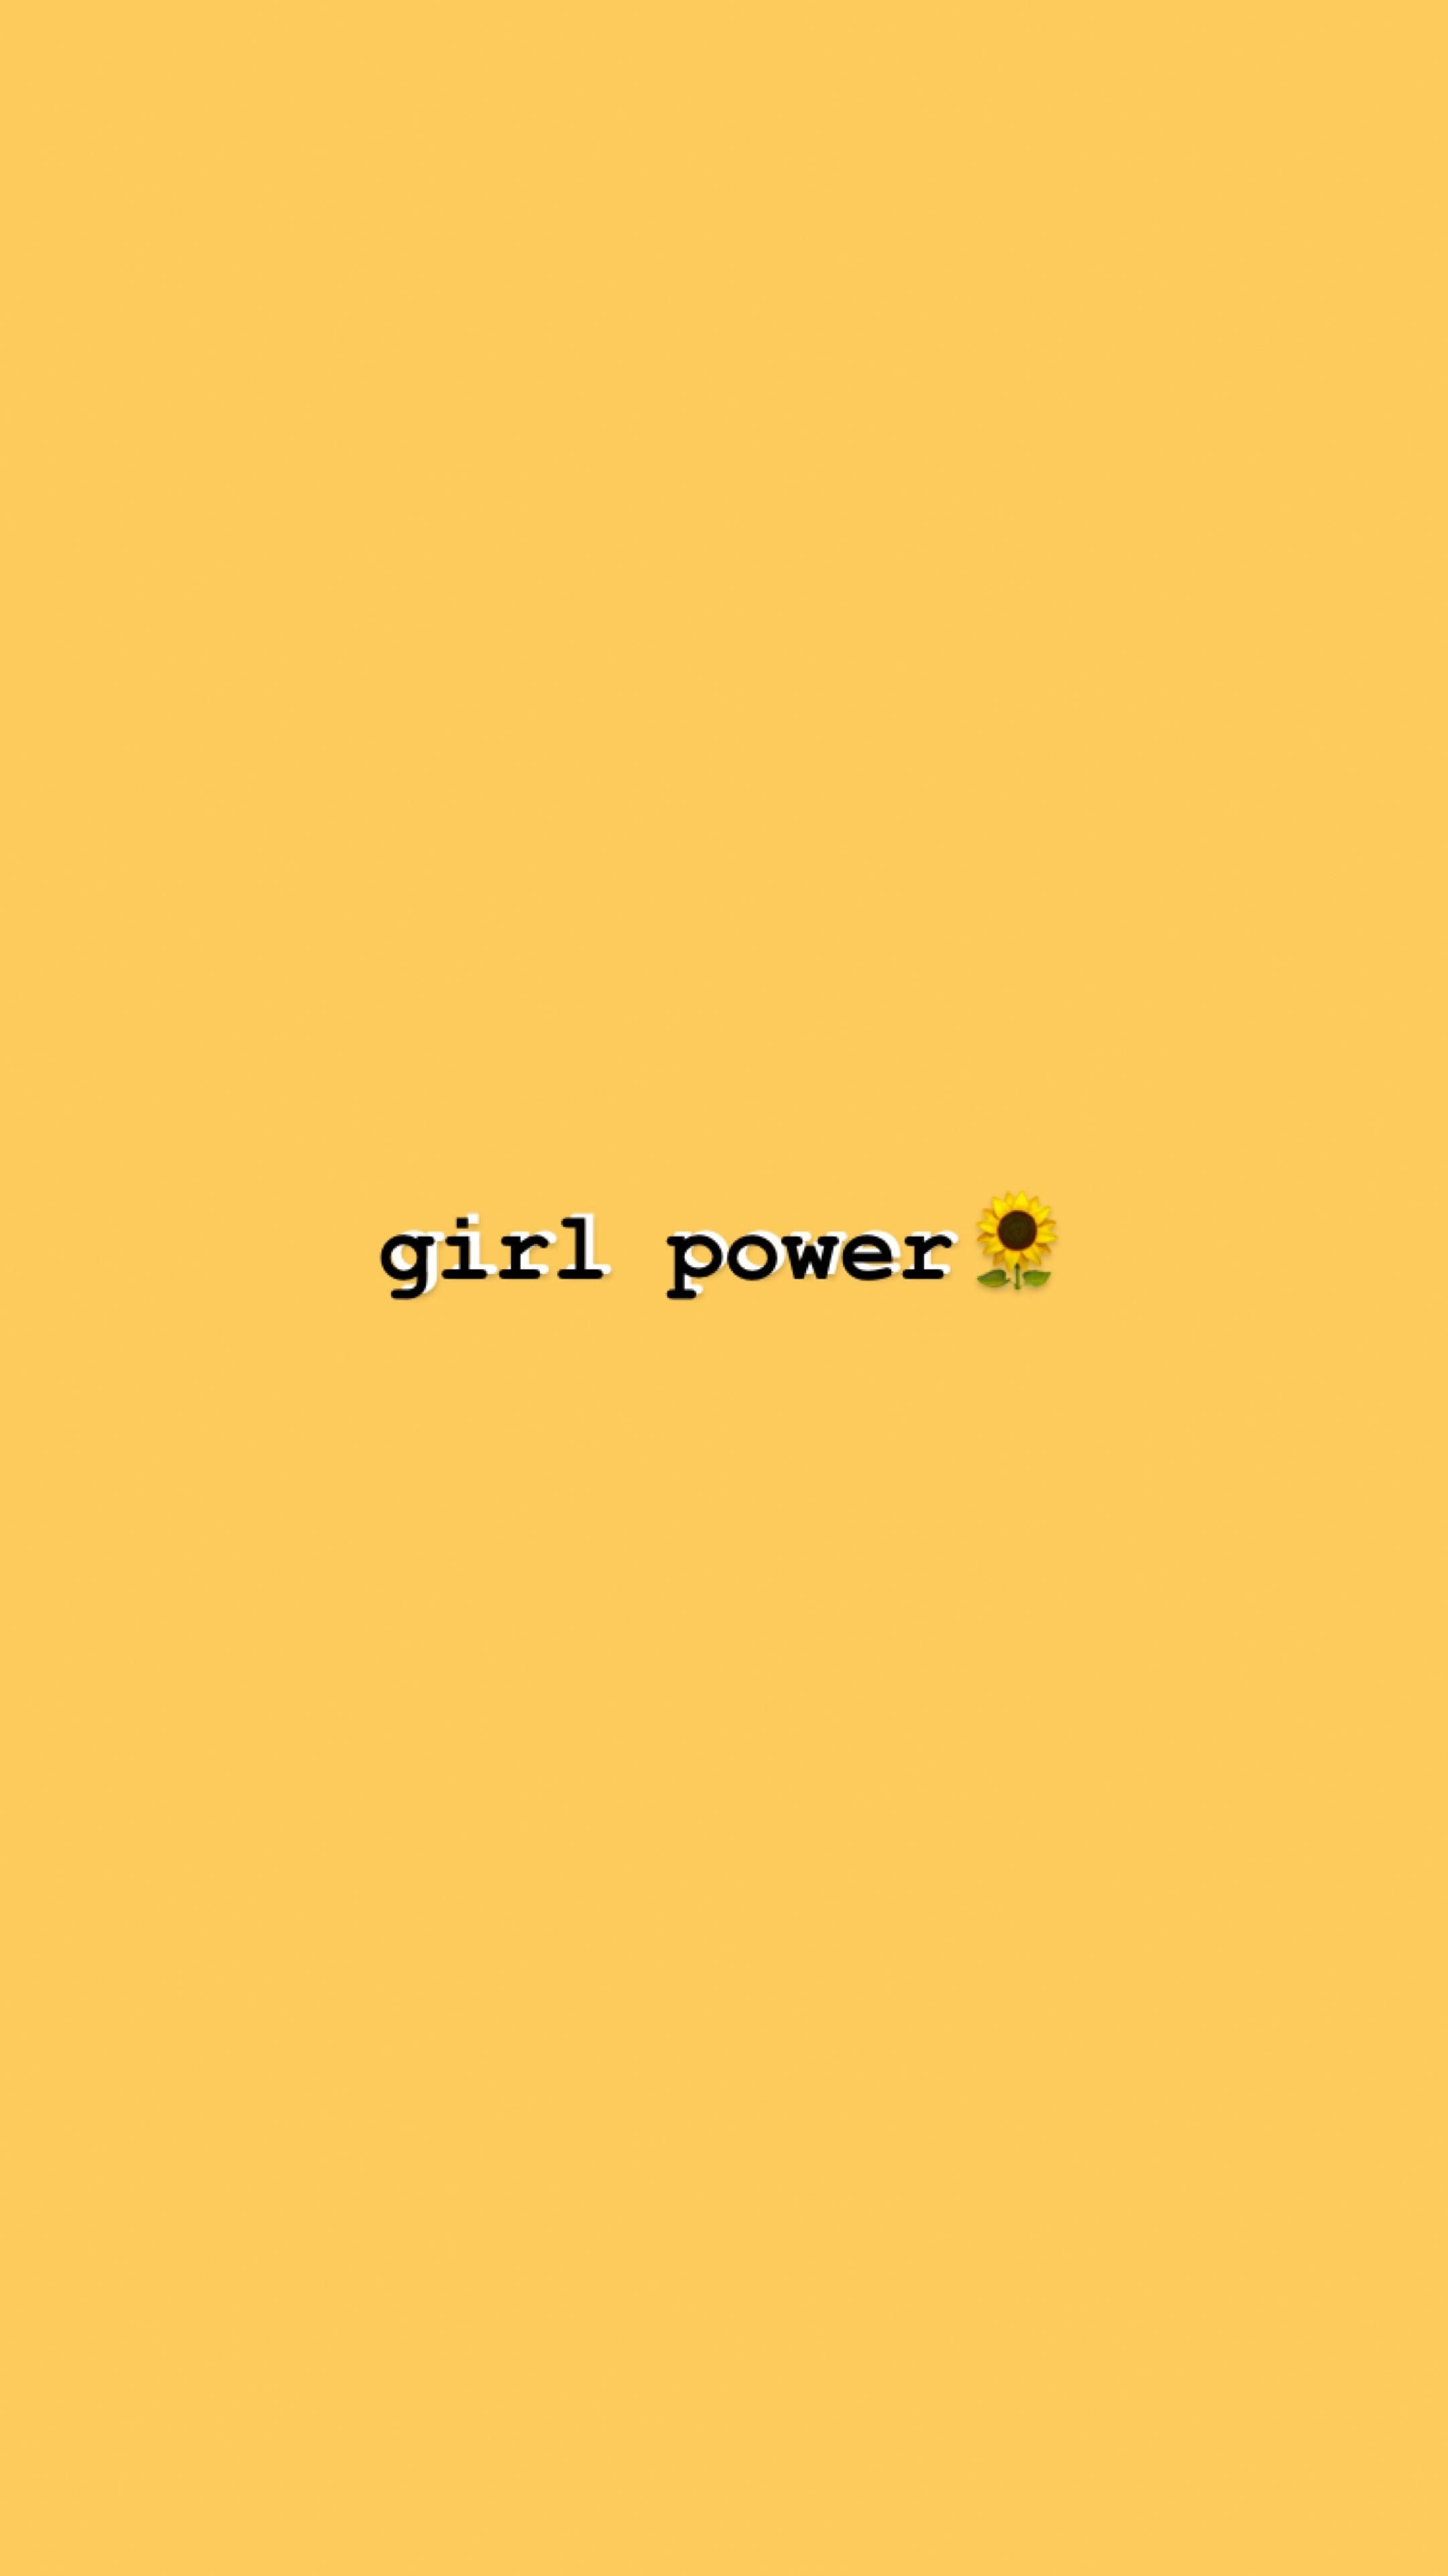 Aesthetic Yellow Girl Power Wallpaper